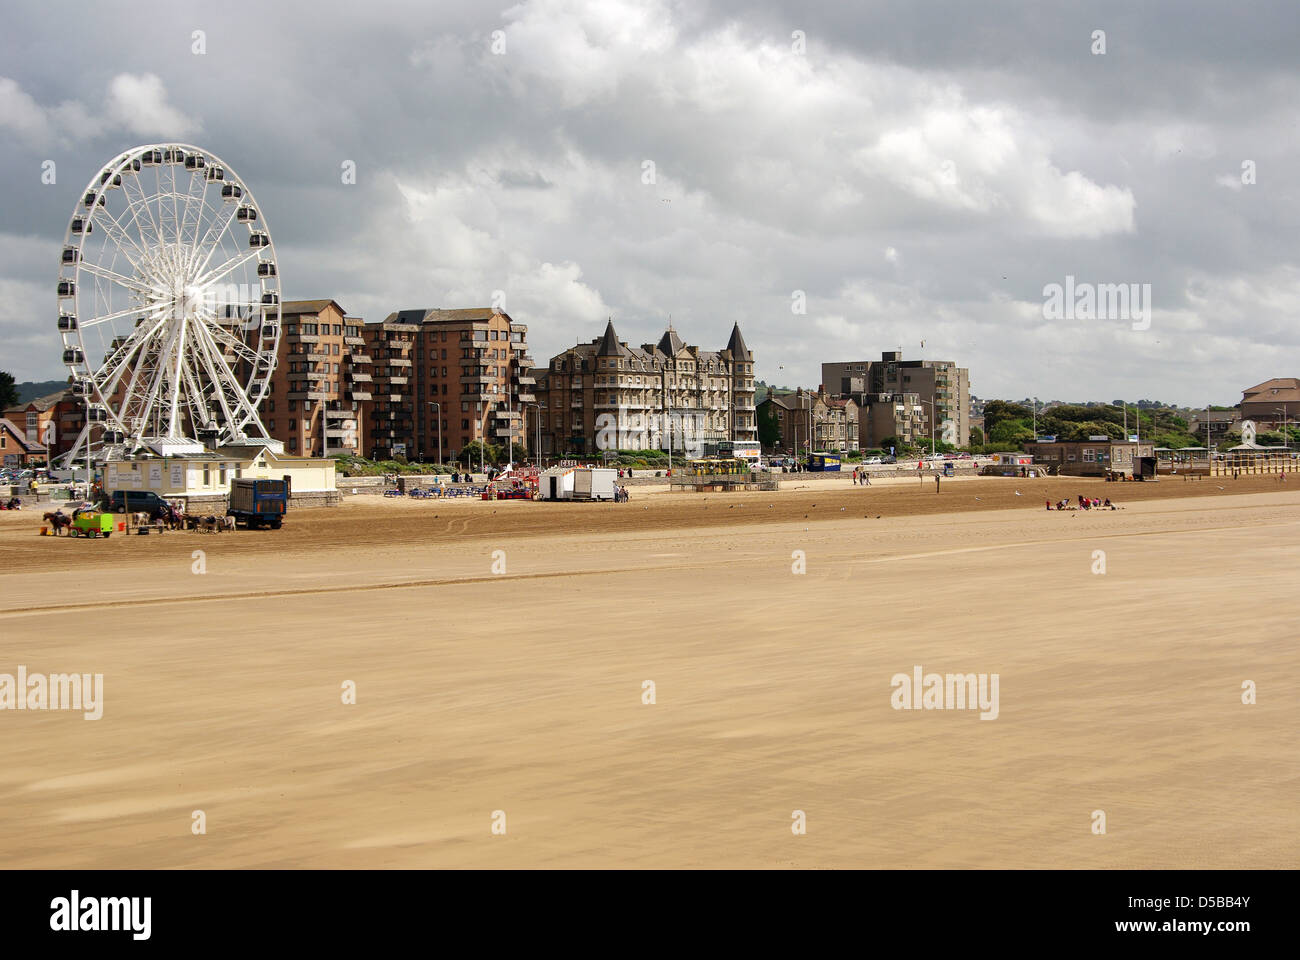 Ferris wheel and beach at Weston Super Mare, UK Stock Photo